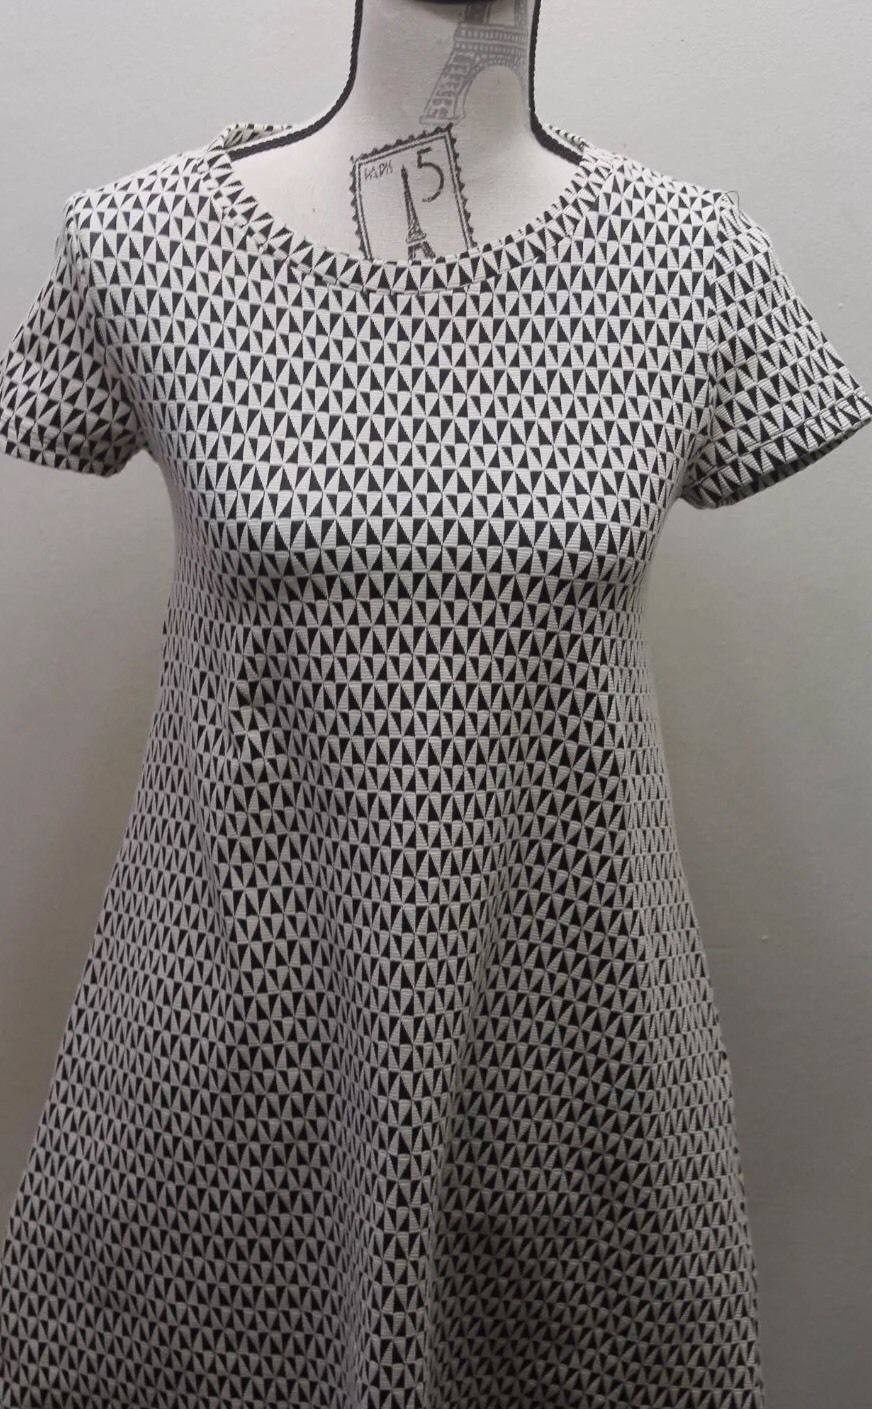 zara black and white knit dress